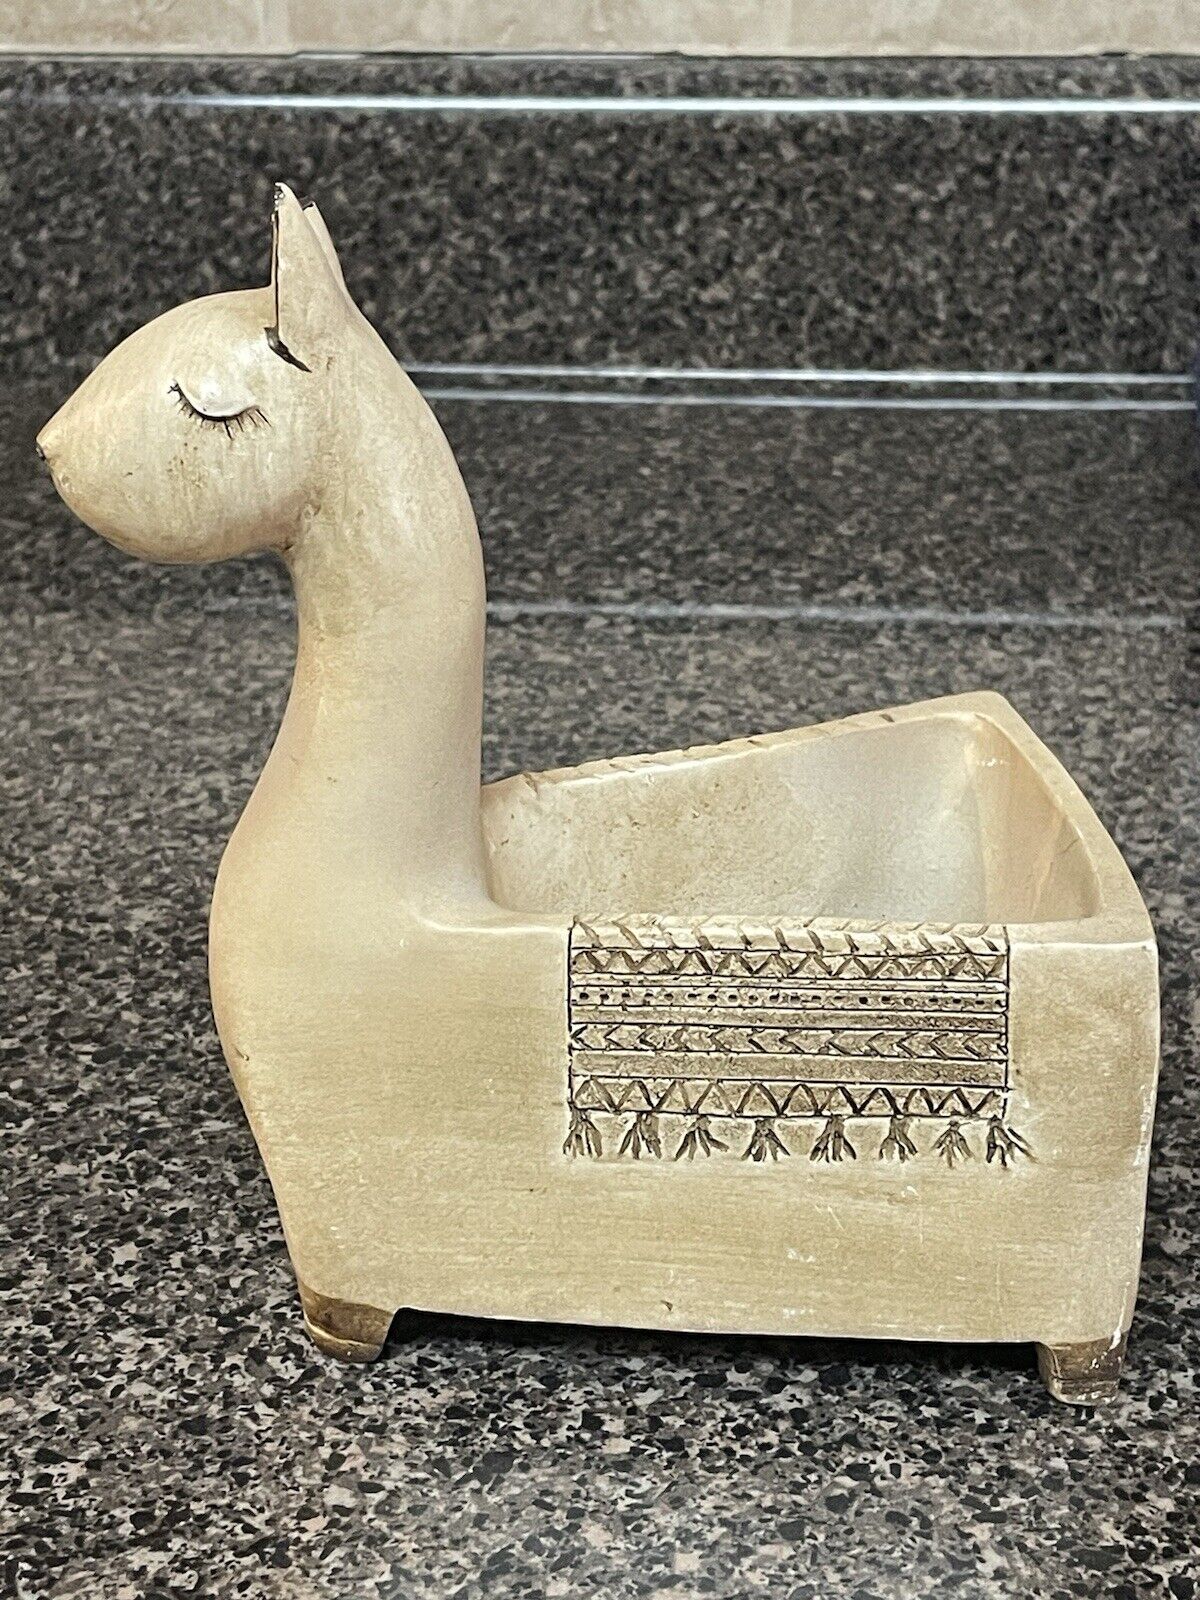 Ceramic Llama/Alpaca Pottery Planter Trinket Dish Flowerpot Tabletop Decor READ